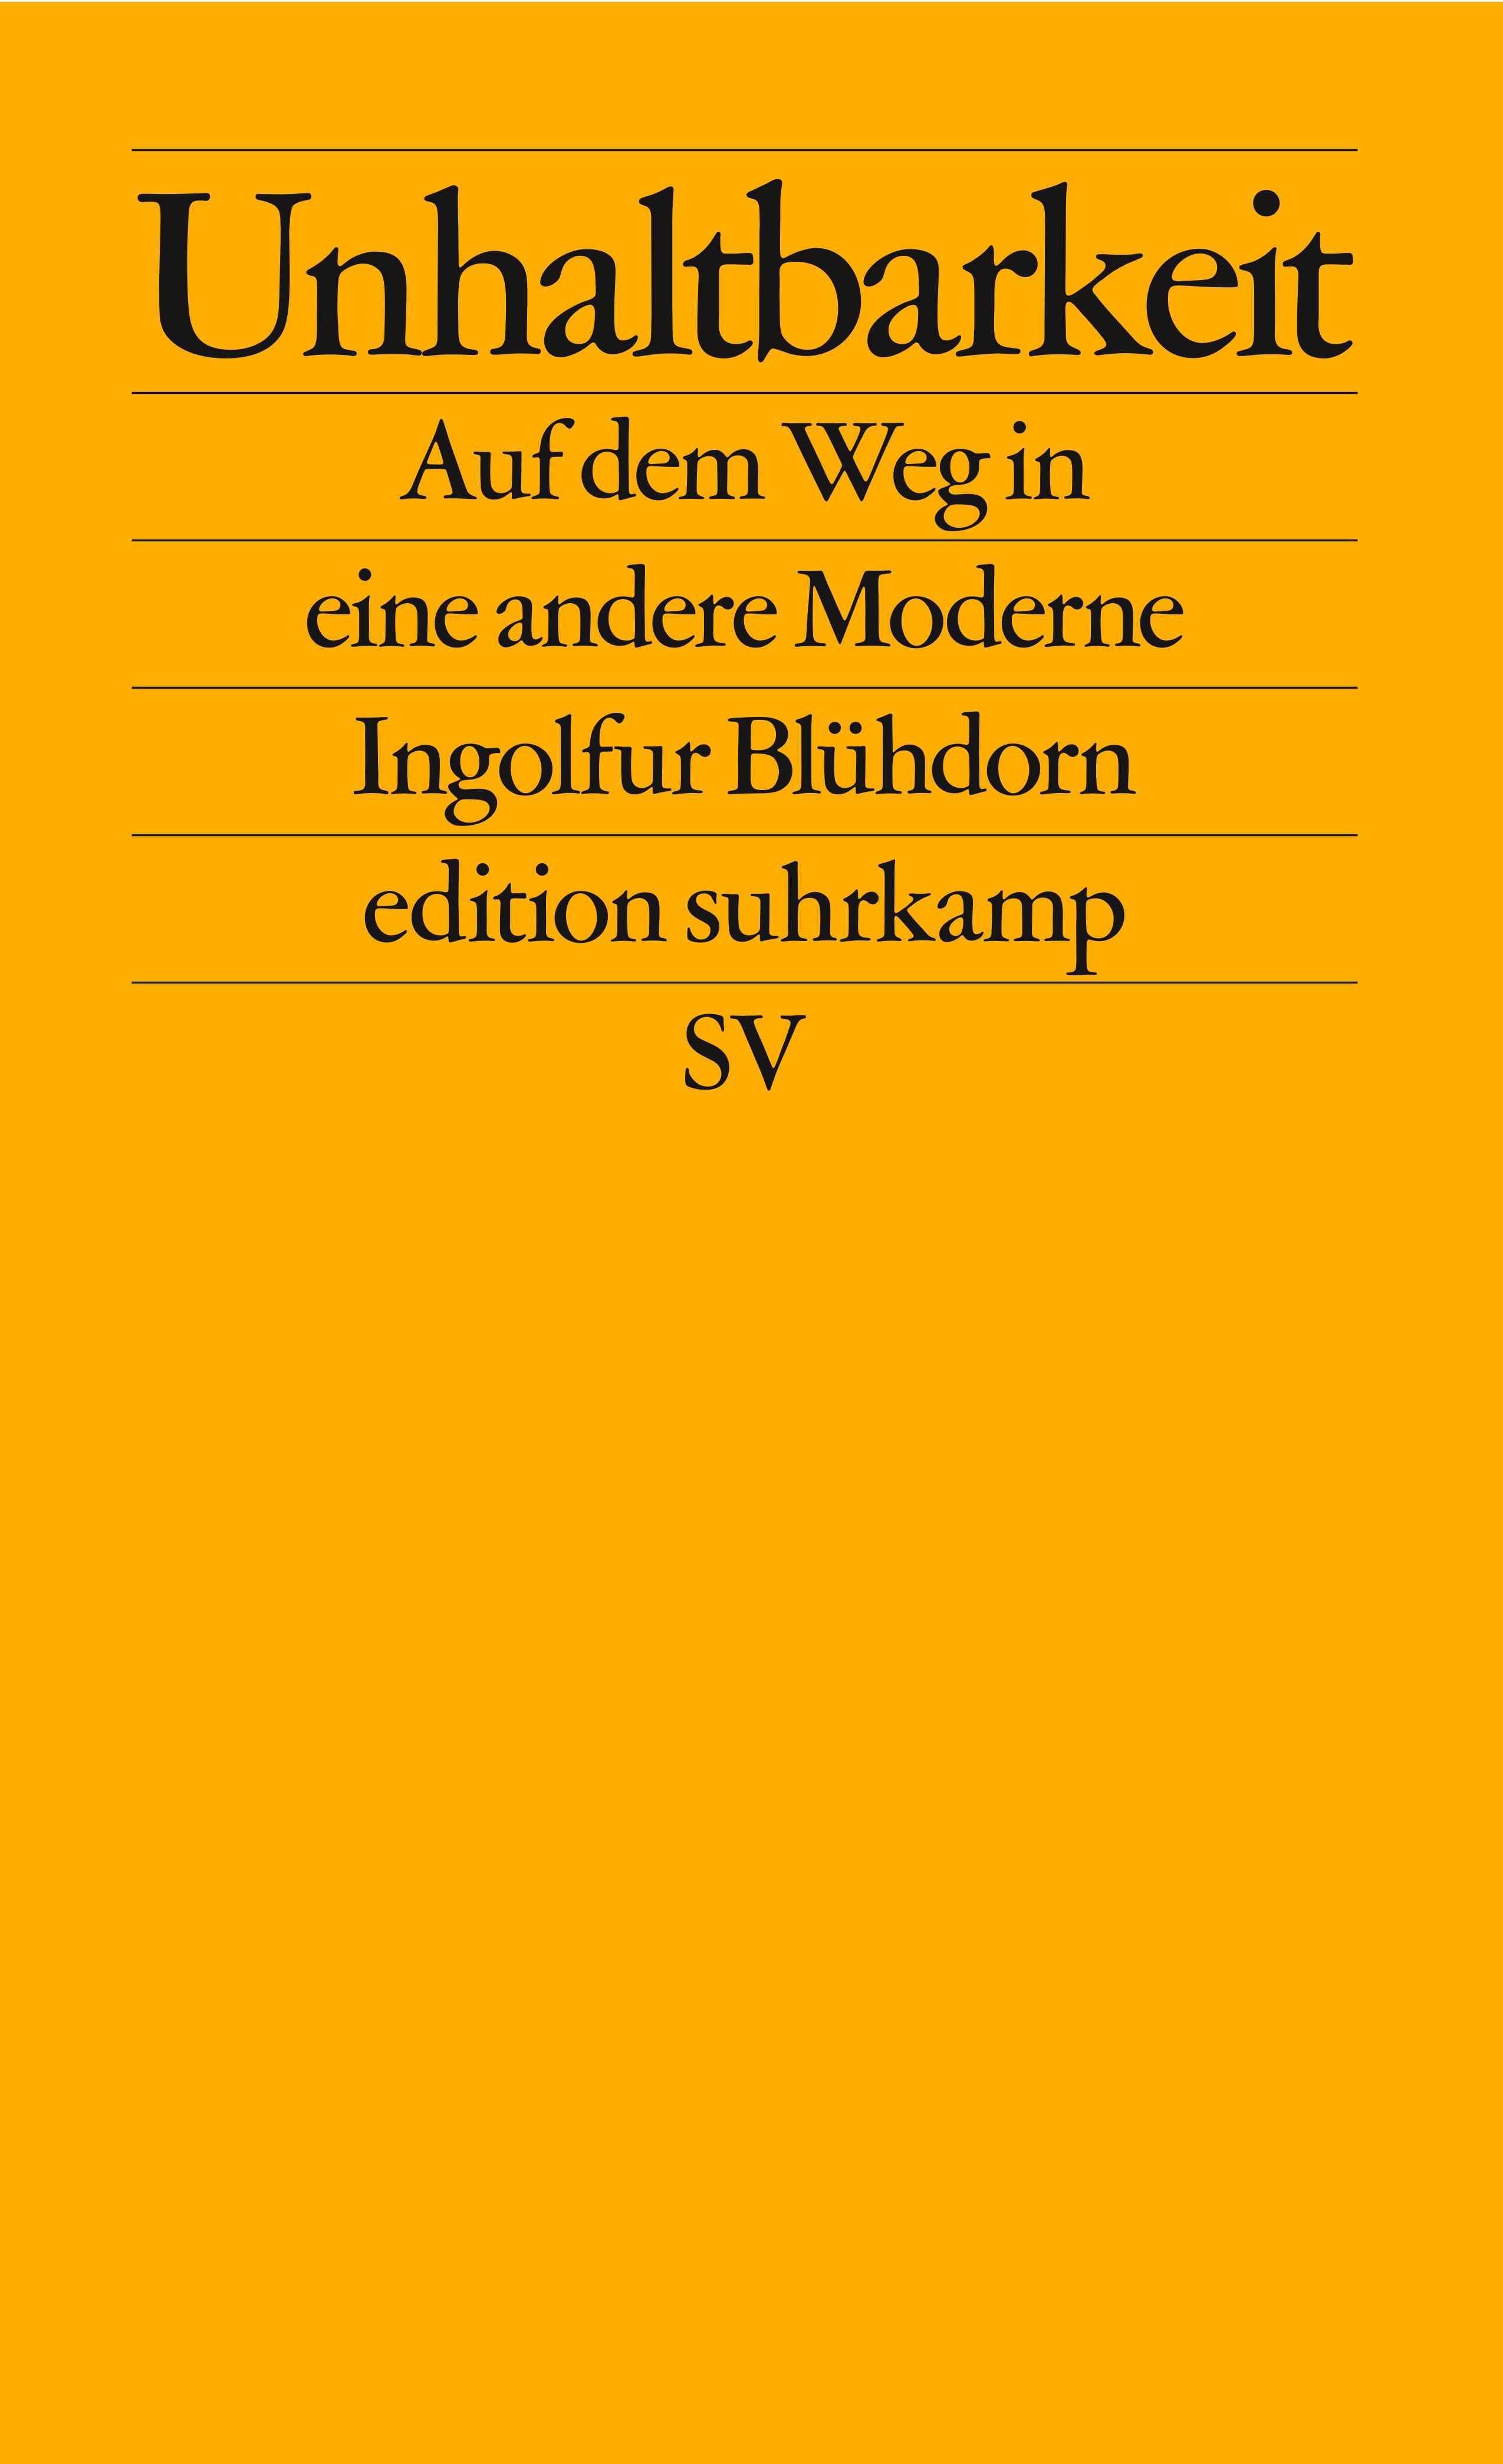 Ingolfur Blühdorn